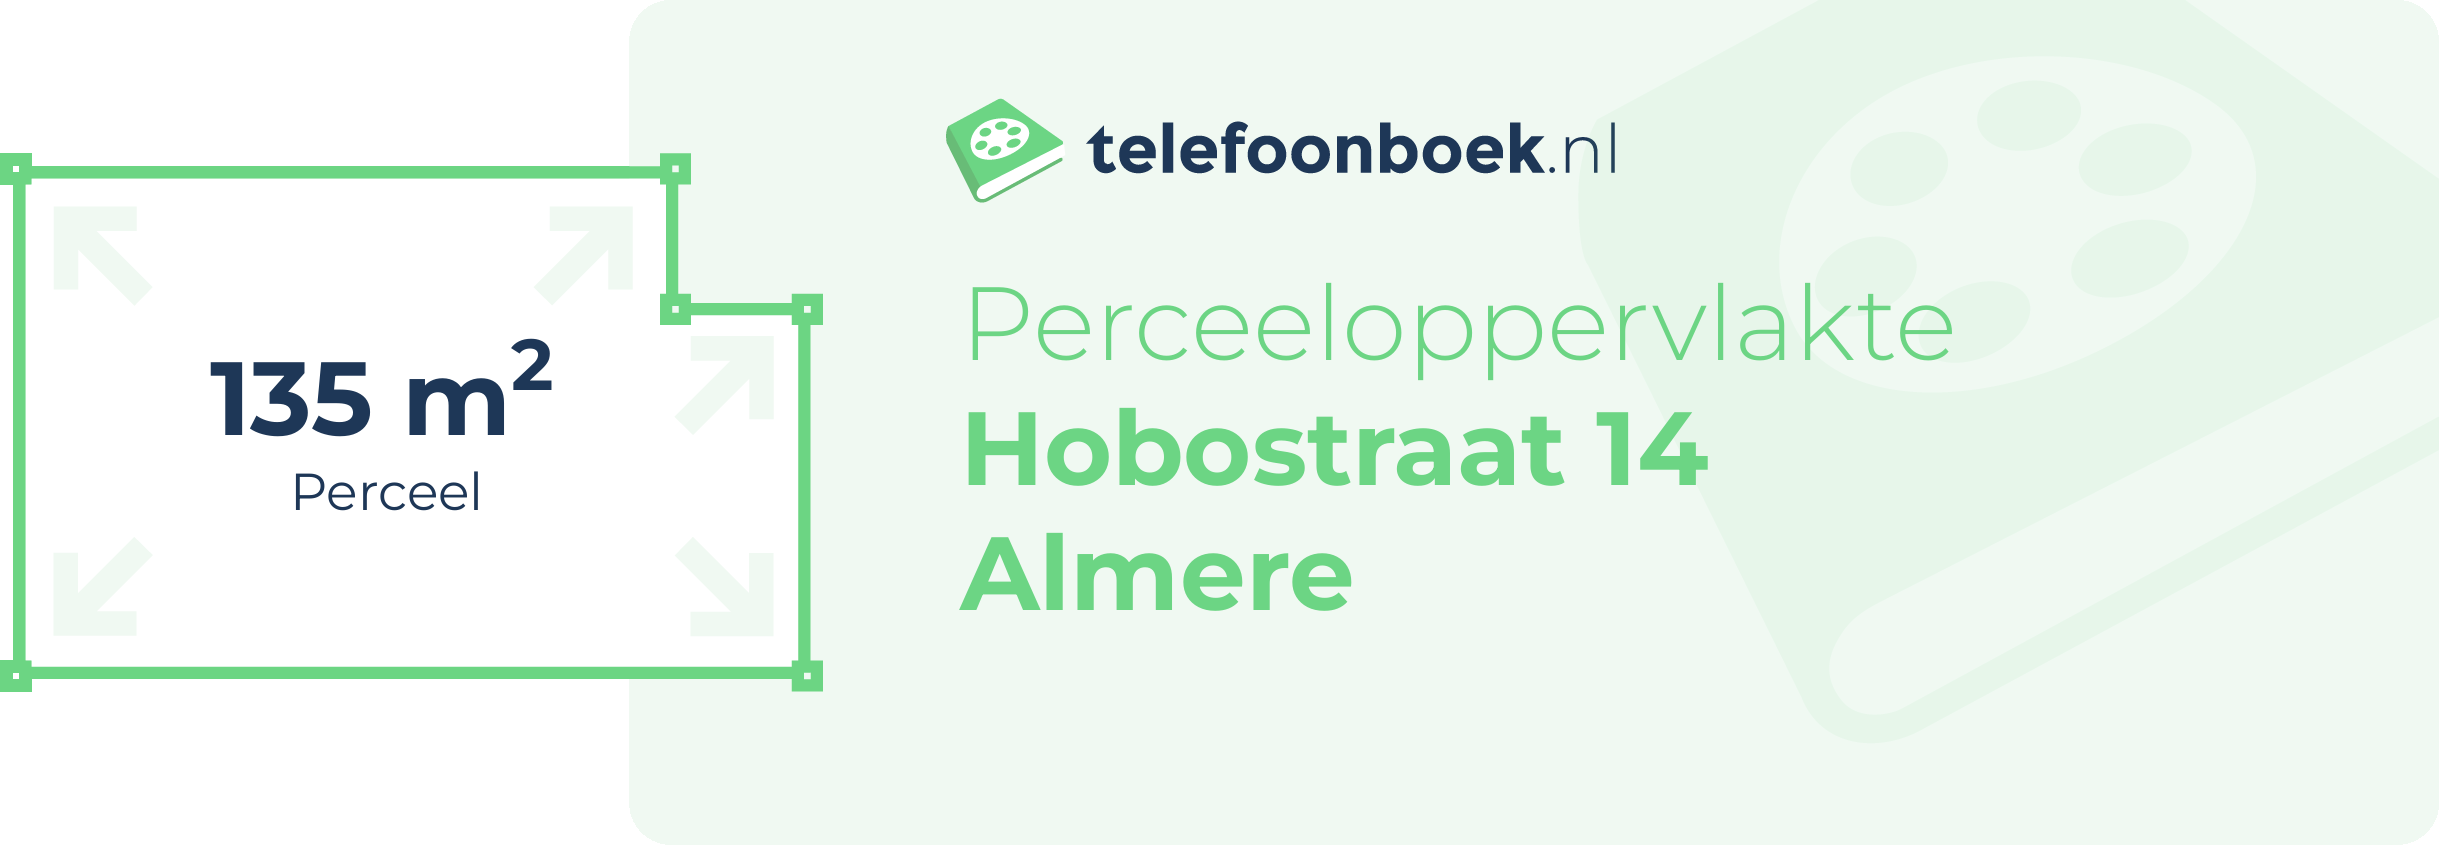 Perceeloppervlakte Hobostraat 14 Almere